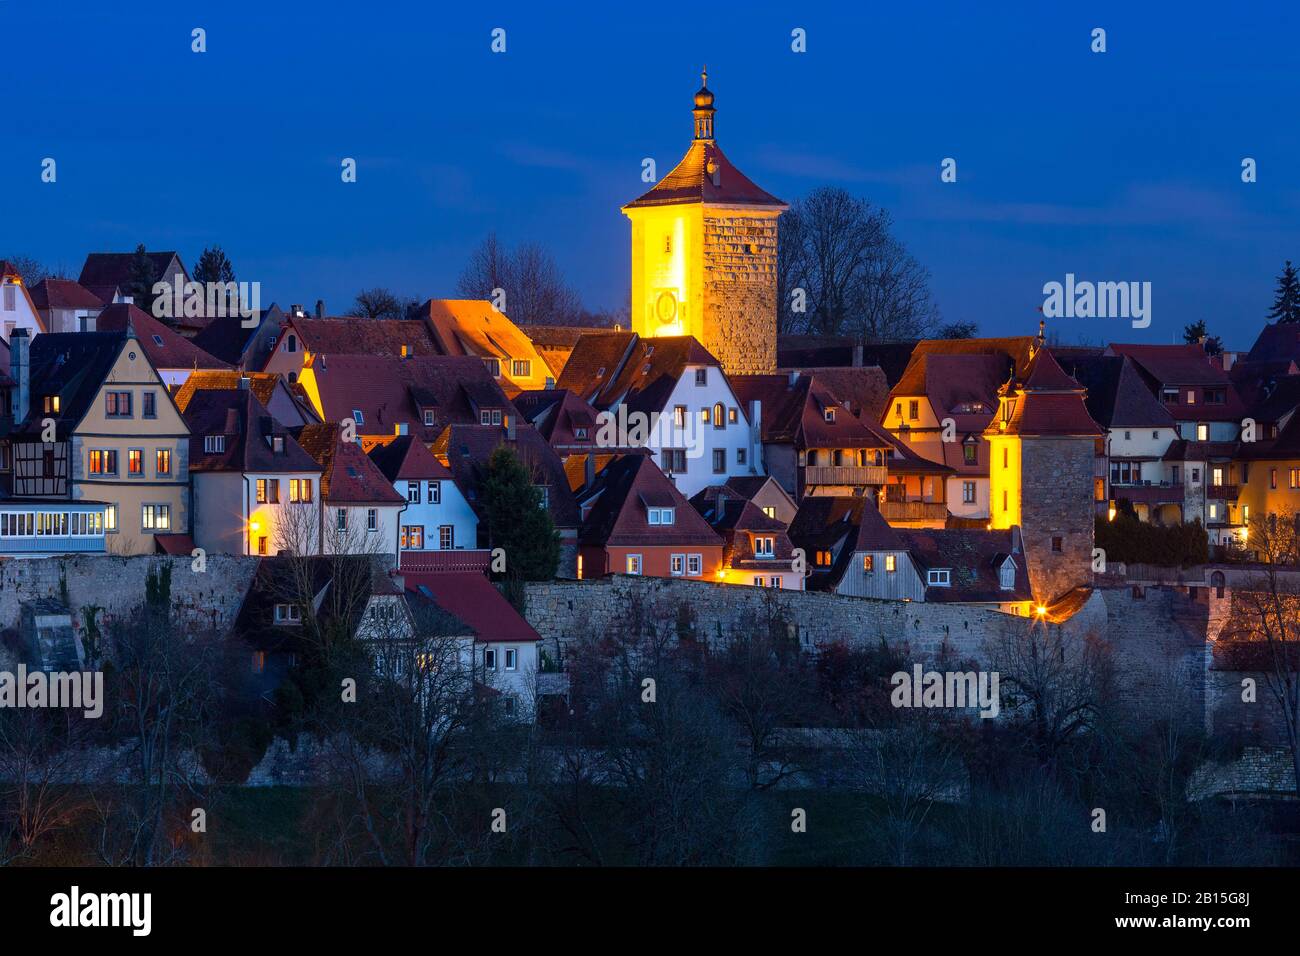 Veduta aerea notturna di tetti, torri e mura cittadine nel centro storico medievale di Rothenburg ob der Tauber, Baviera, Germania meridionale Foto Stock